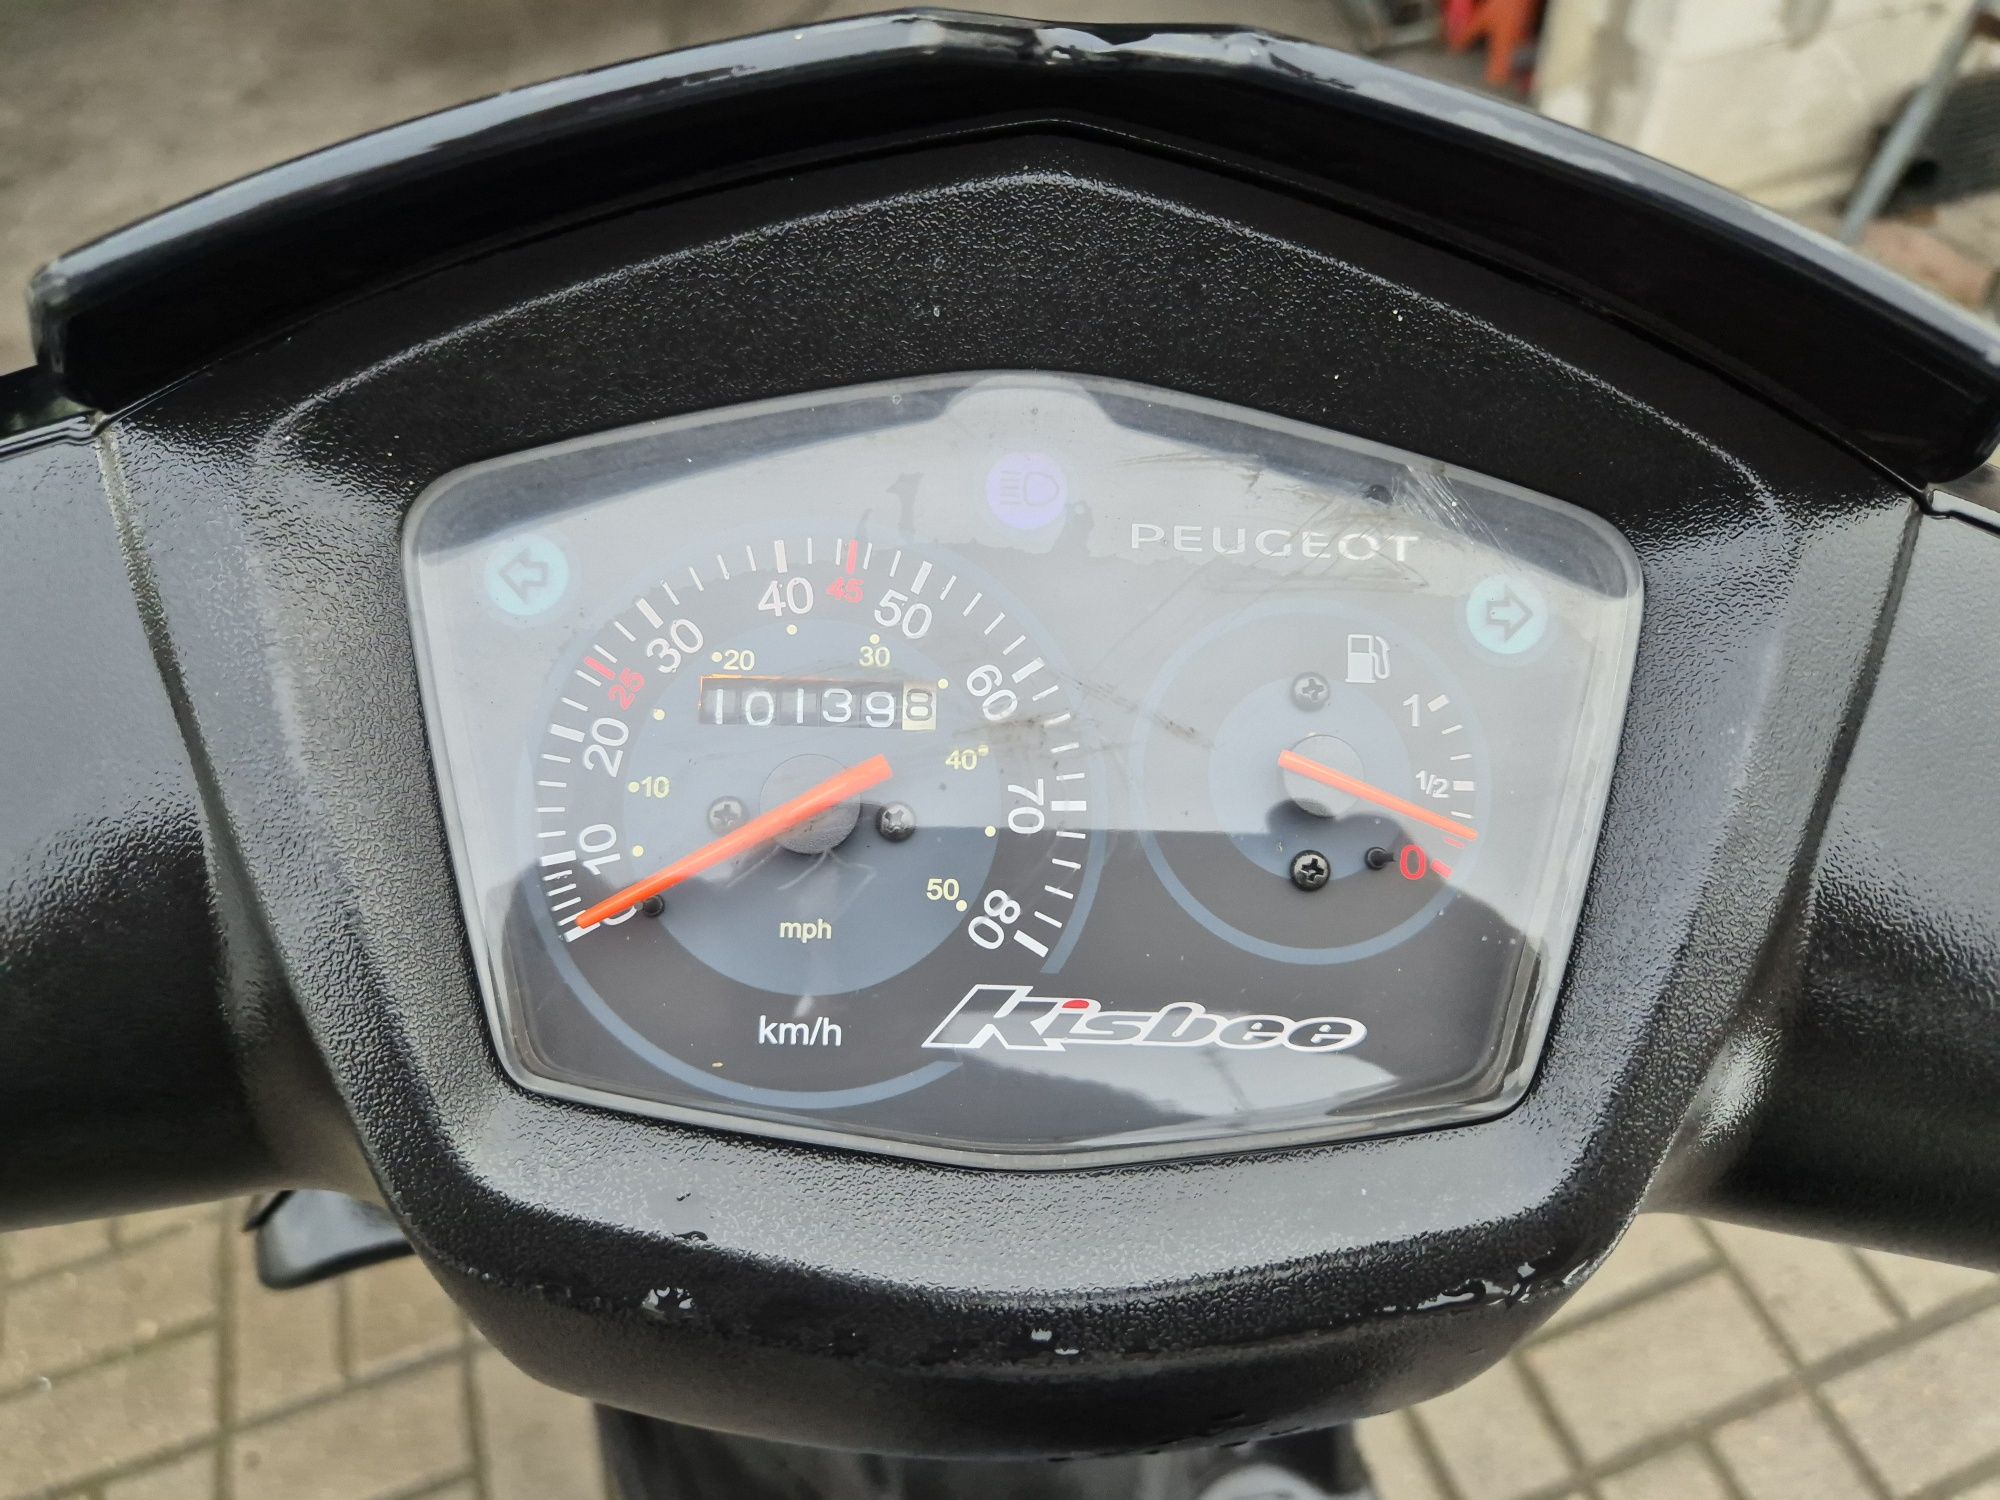 Peugeot kisbee skuter 50cc